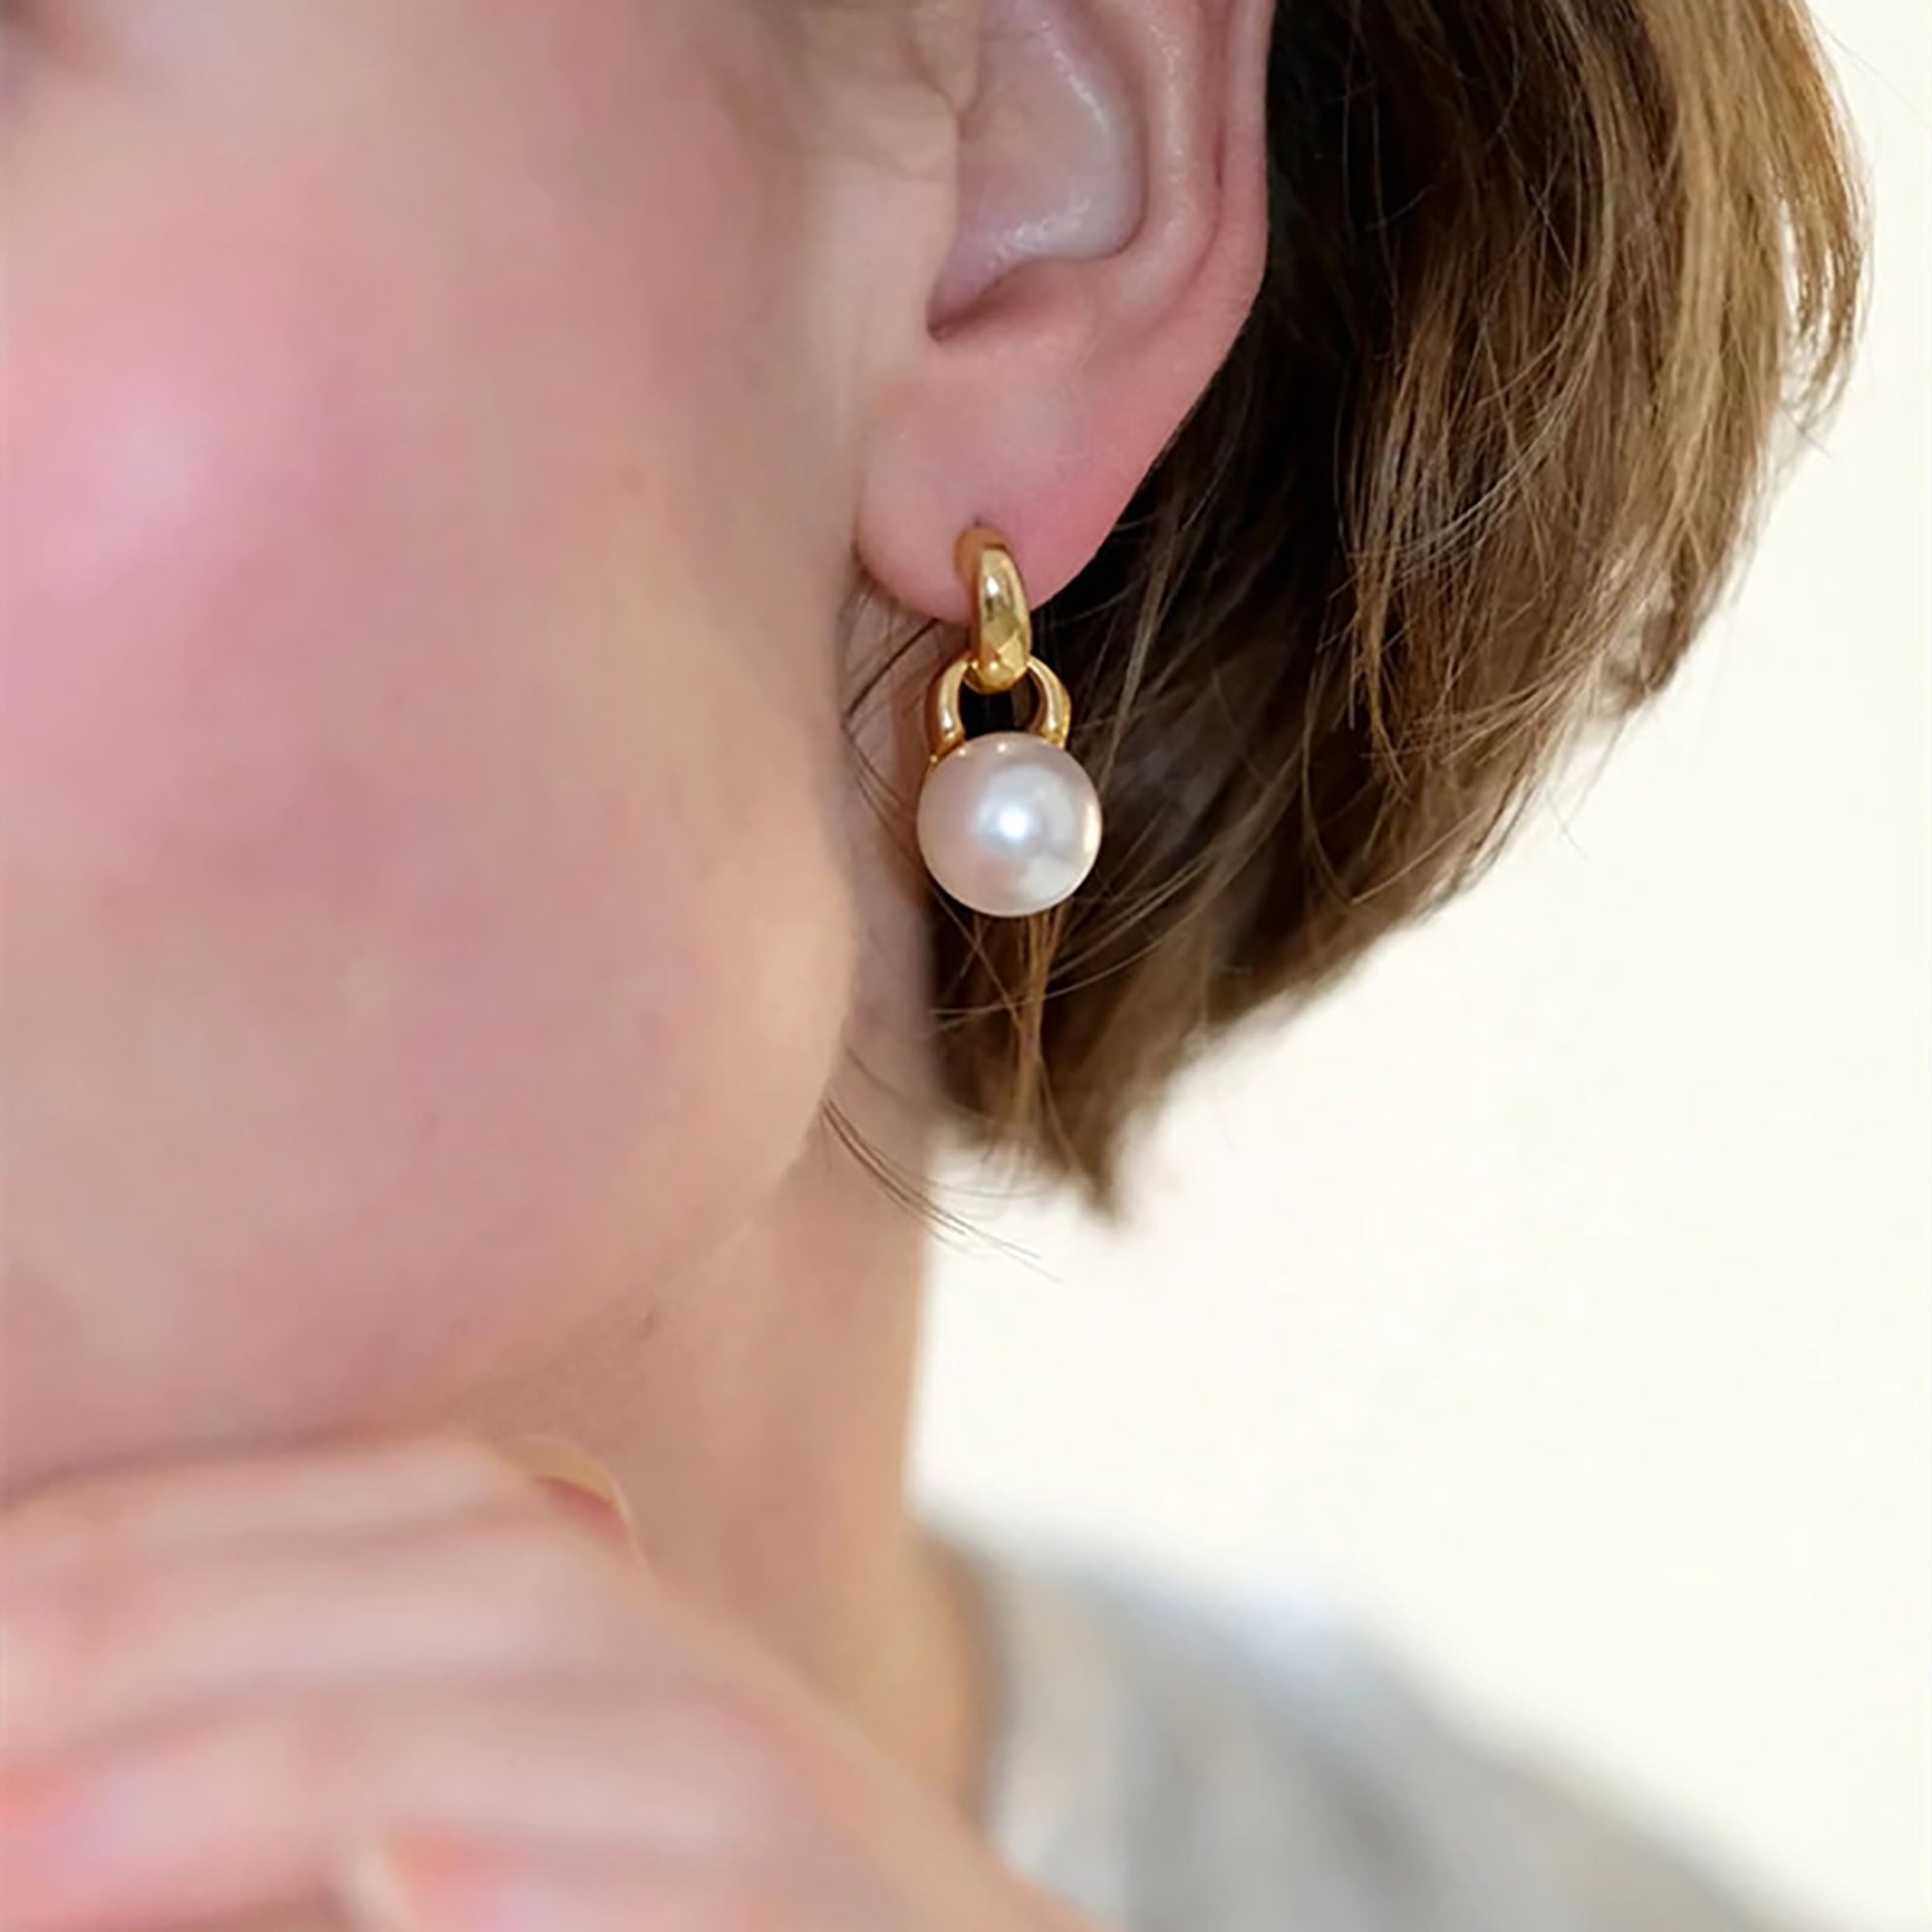 Pearl Dangle Earrings Gift wedding influencer styling KOL / Youtuber / Celebrity / Fashion Icon